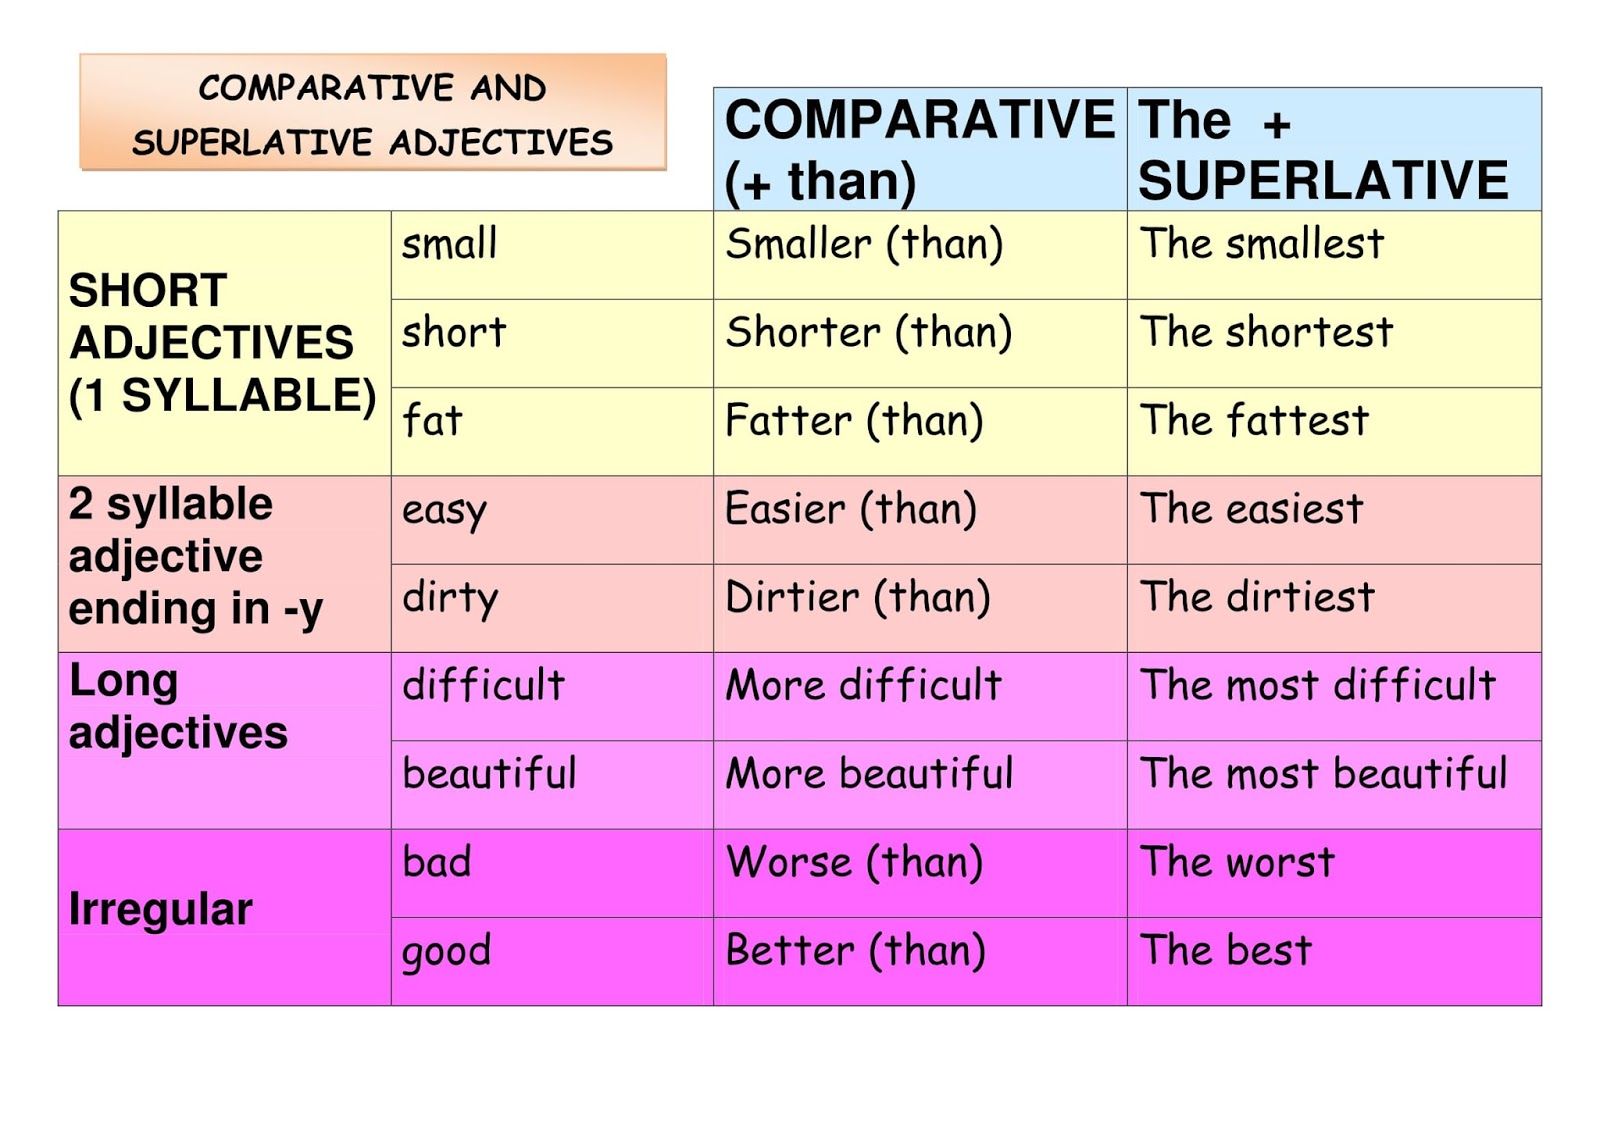 Adjective comparative superlative fast. Superlative adjectives правило. Таблица Comparative and Superlative. Comparative and Superlative forms of adjectives. Comparative and Superlative adjectives правило.